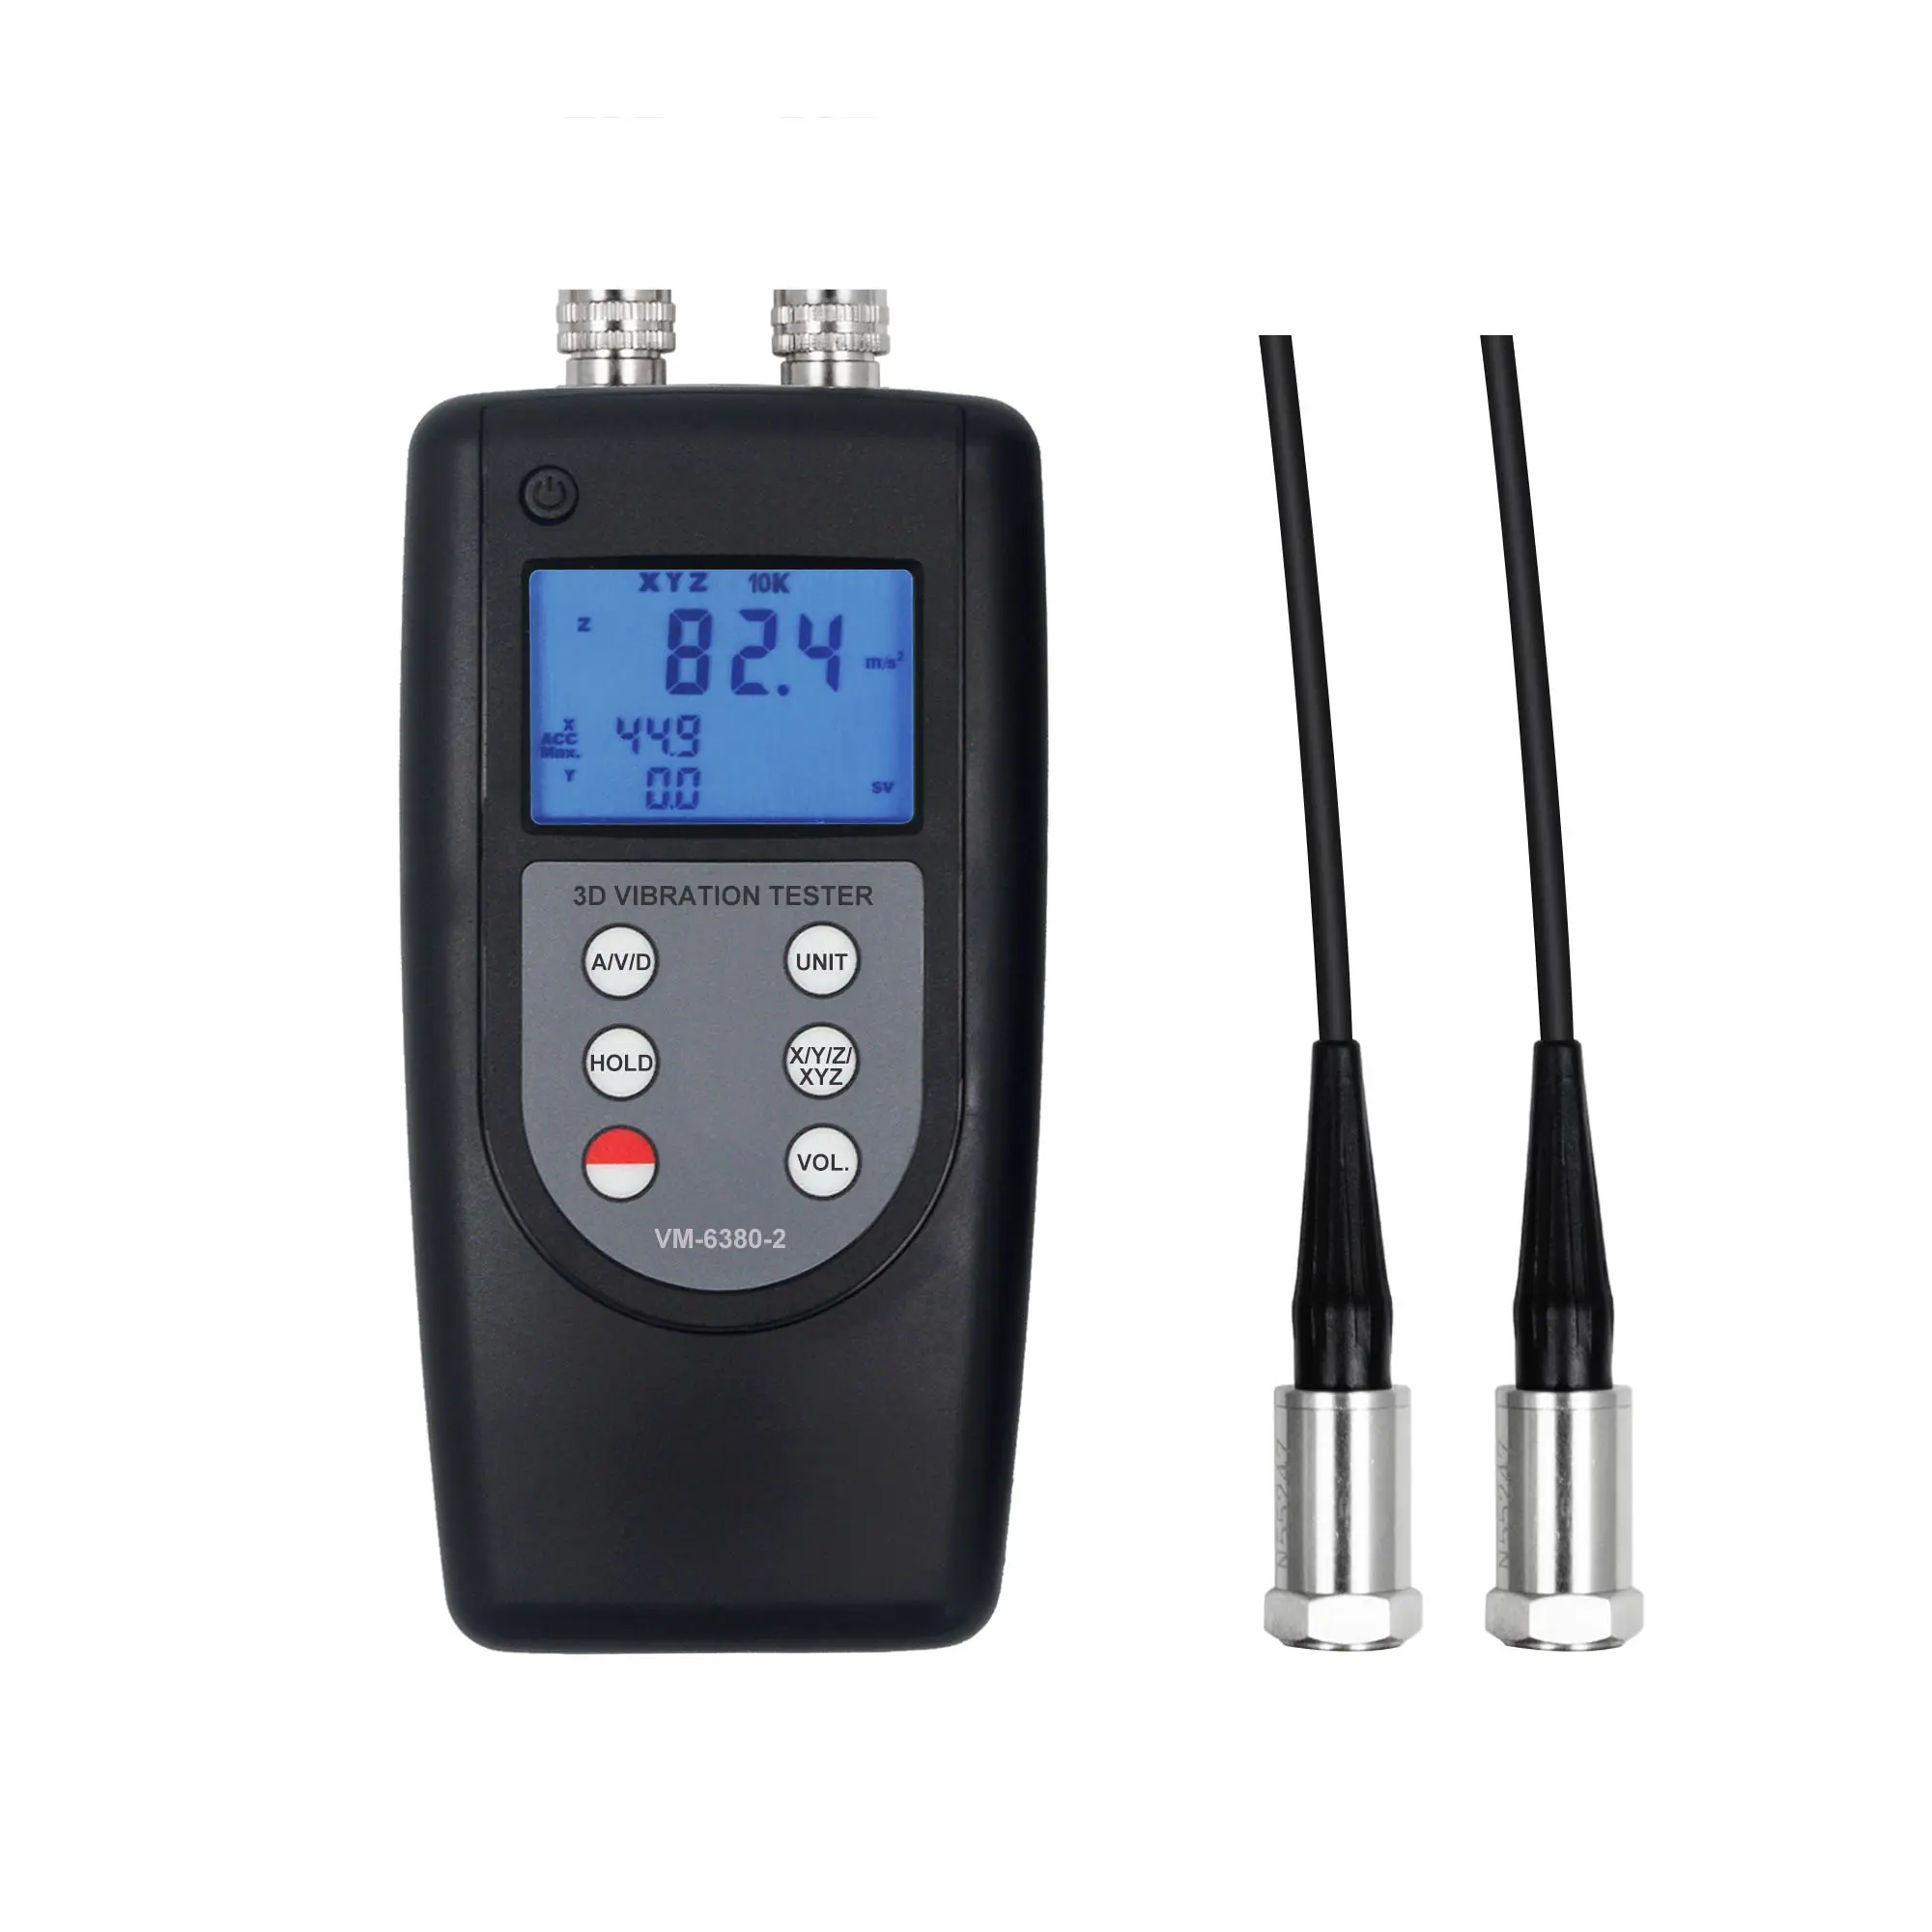 VM-6380-2 Vibration Meter 2 Channel Vibrometer Velocity Measuring Range 0.01~400mm/s